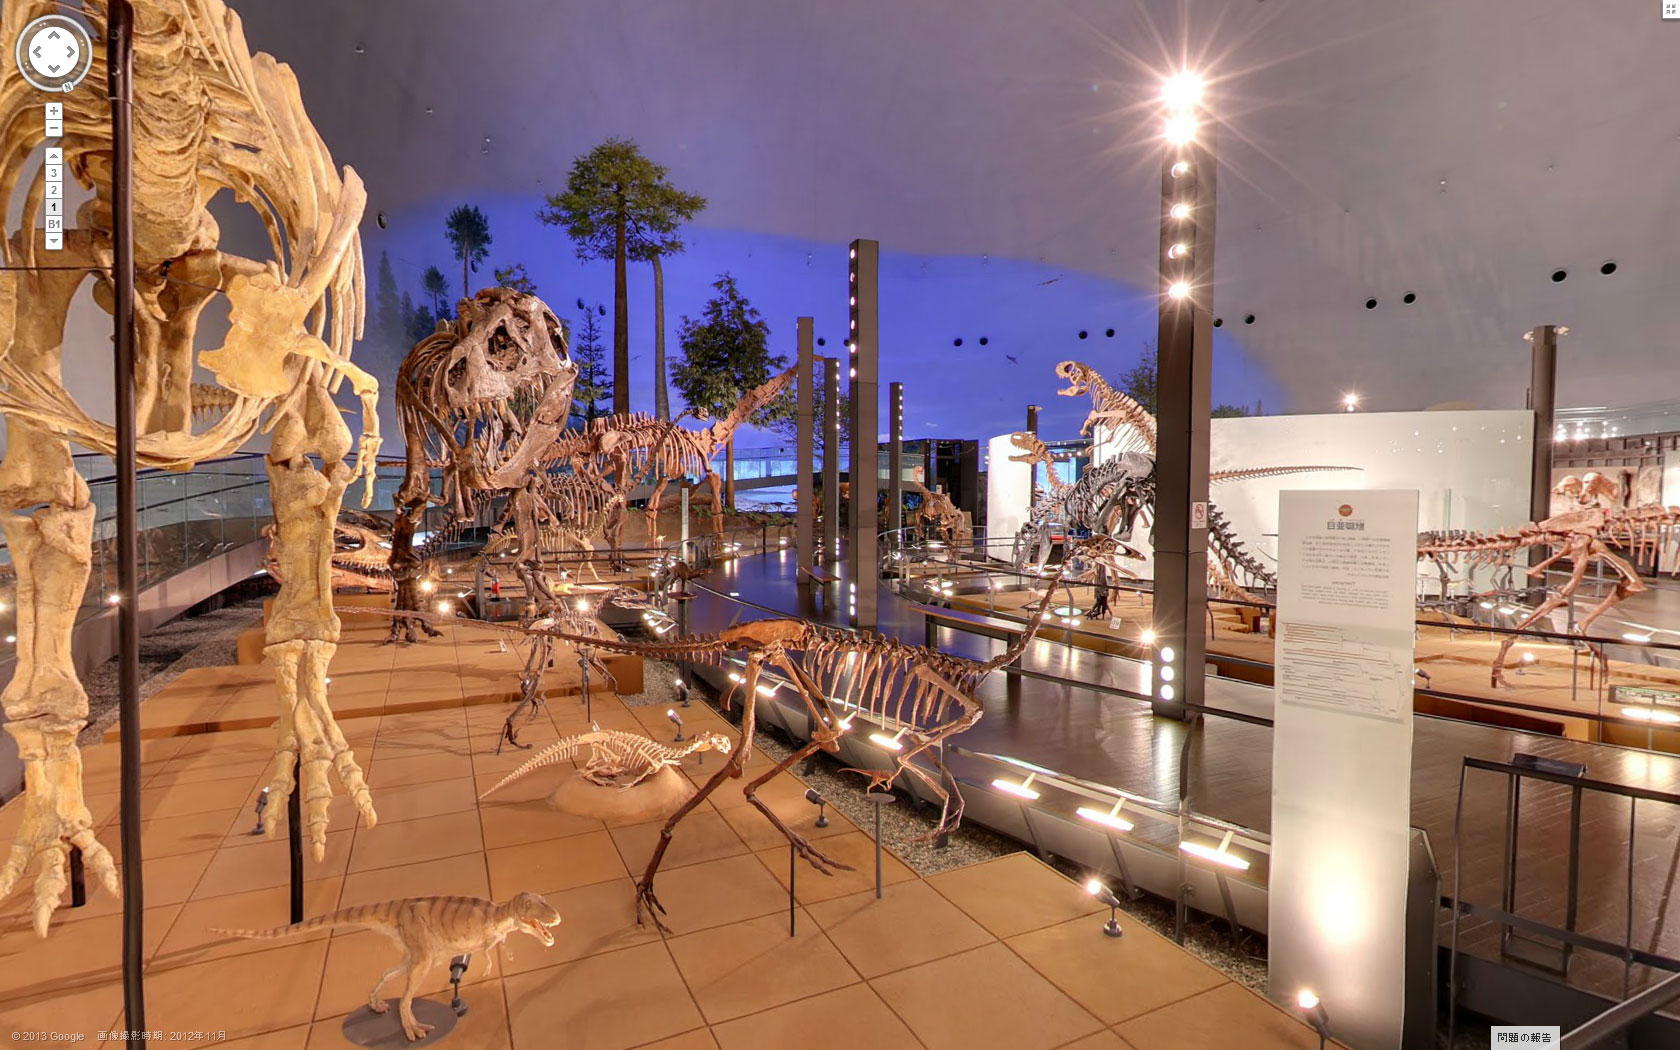 Googleマップのストリートビューで恐竜博物館をご覧ください お知らせ 新着情報 Fpdm 福井県立恐竜博物館